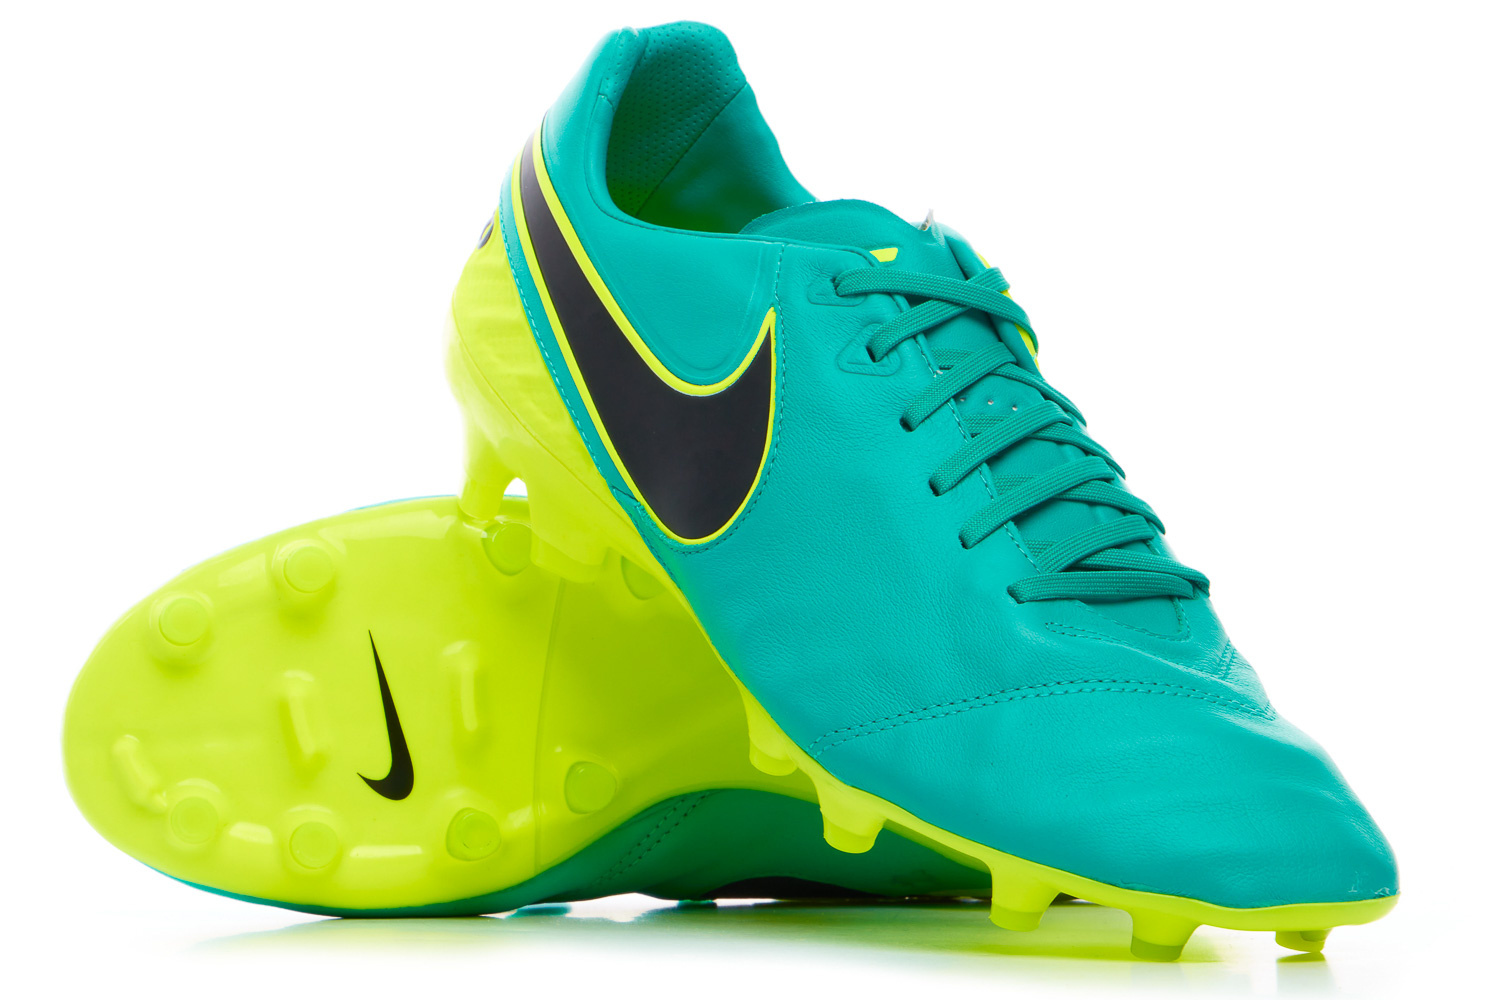 Nike Tiempo II Football Boots *In FG